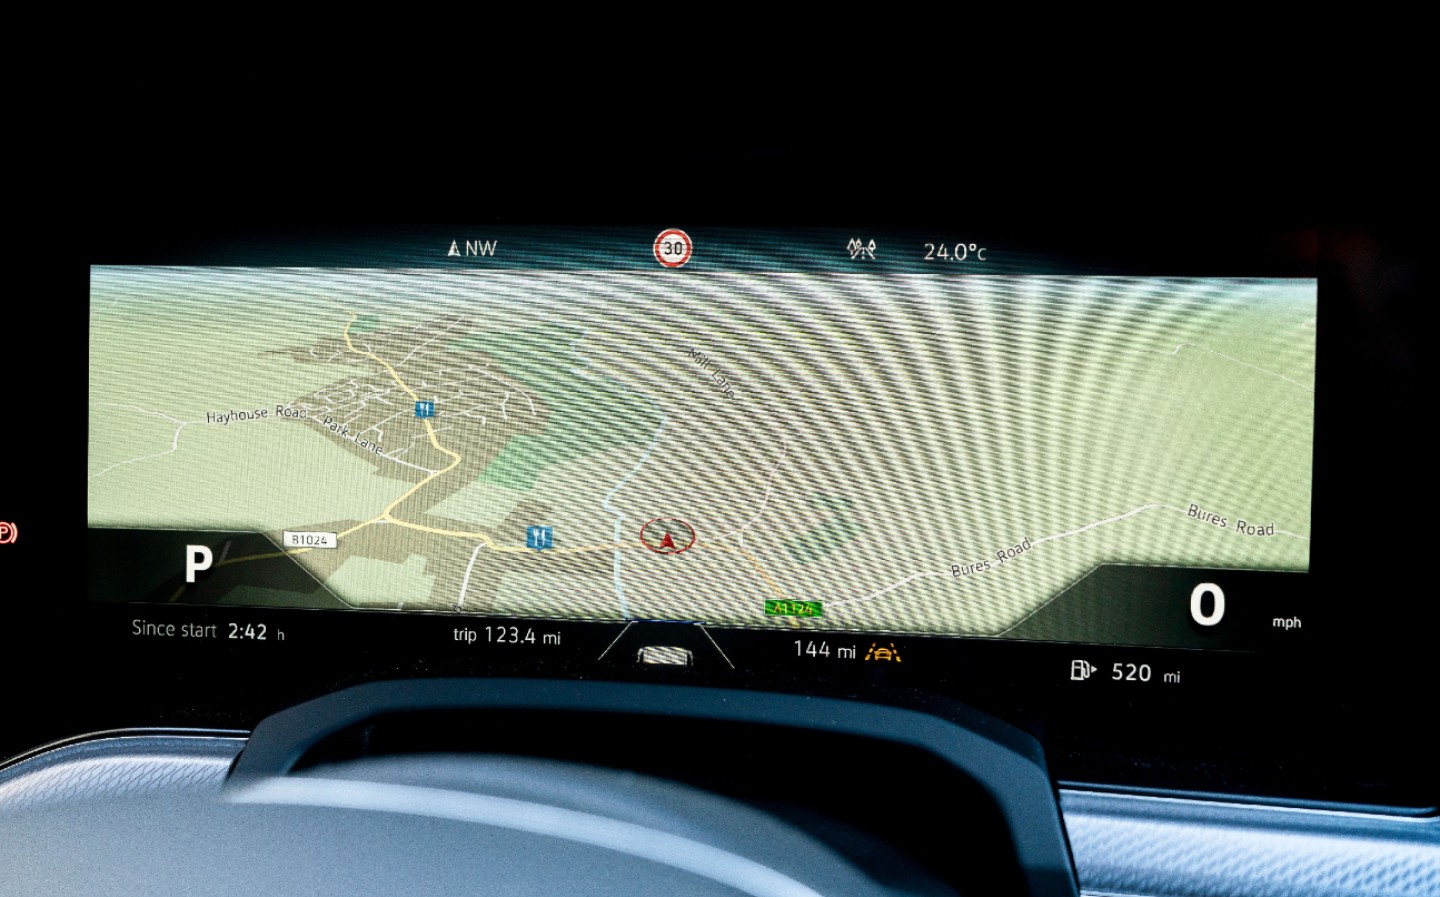 How good is the VW Touareg's touchscreen infotainment?